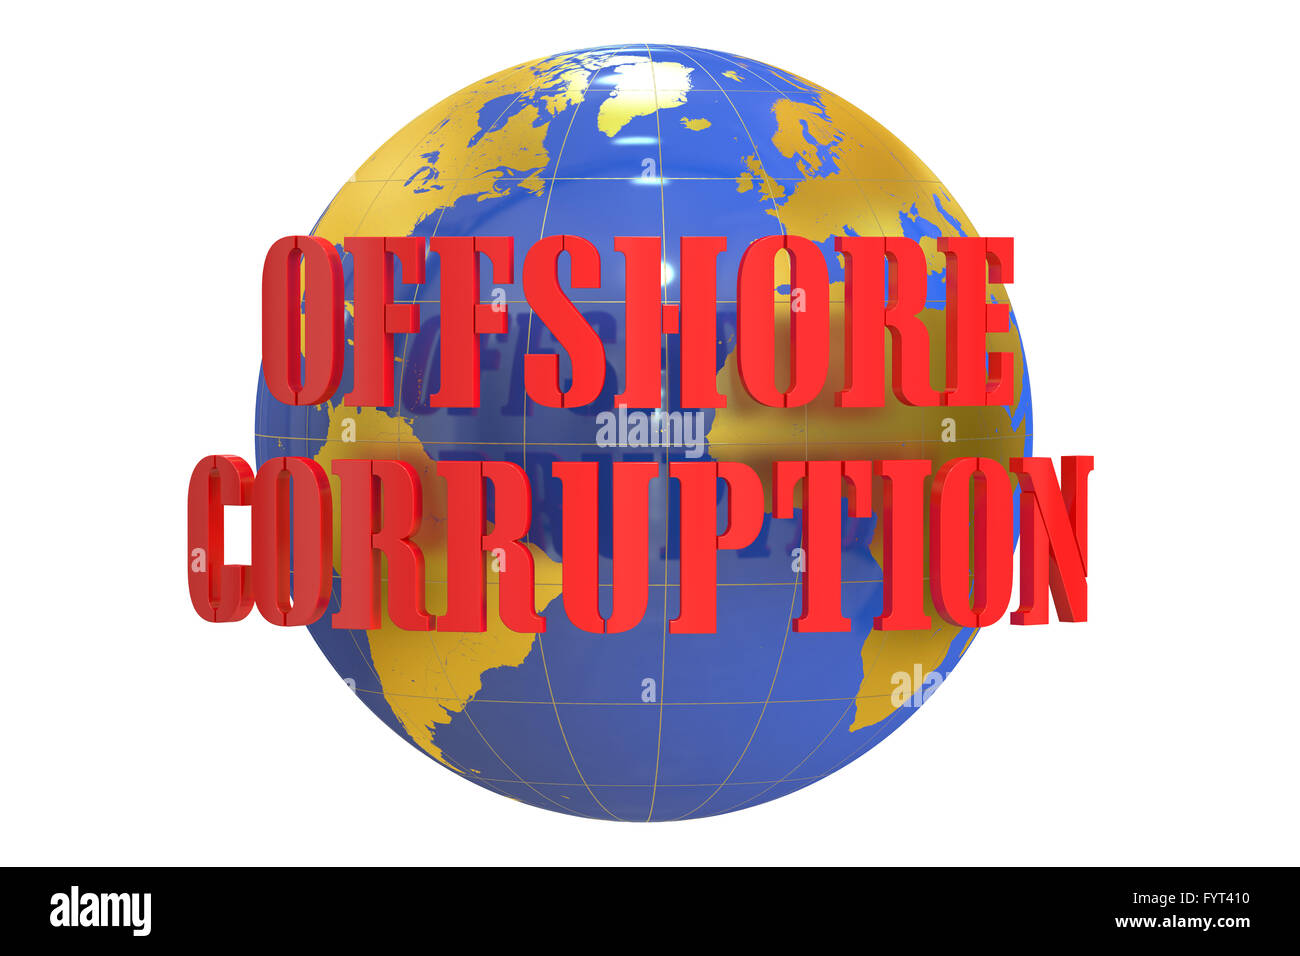 Offshore-Korruption-Konzept, 3D rendering Stockfoto